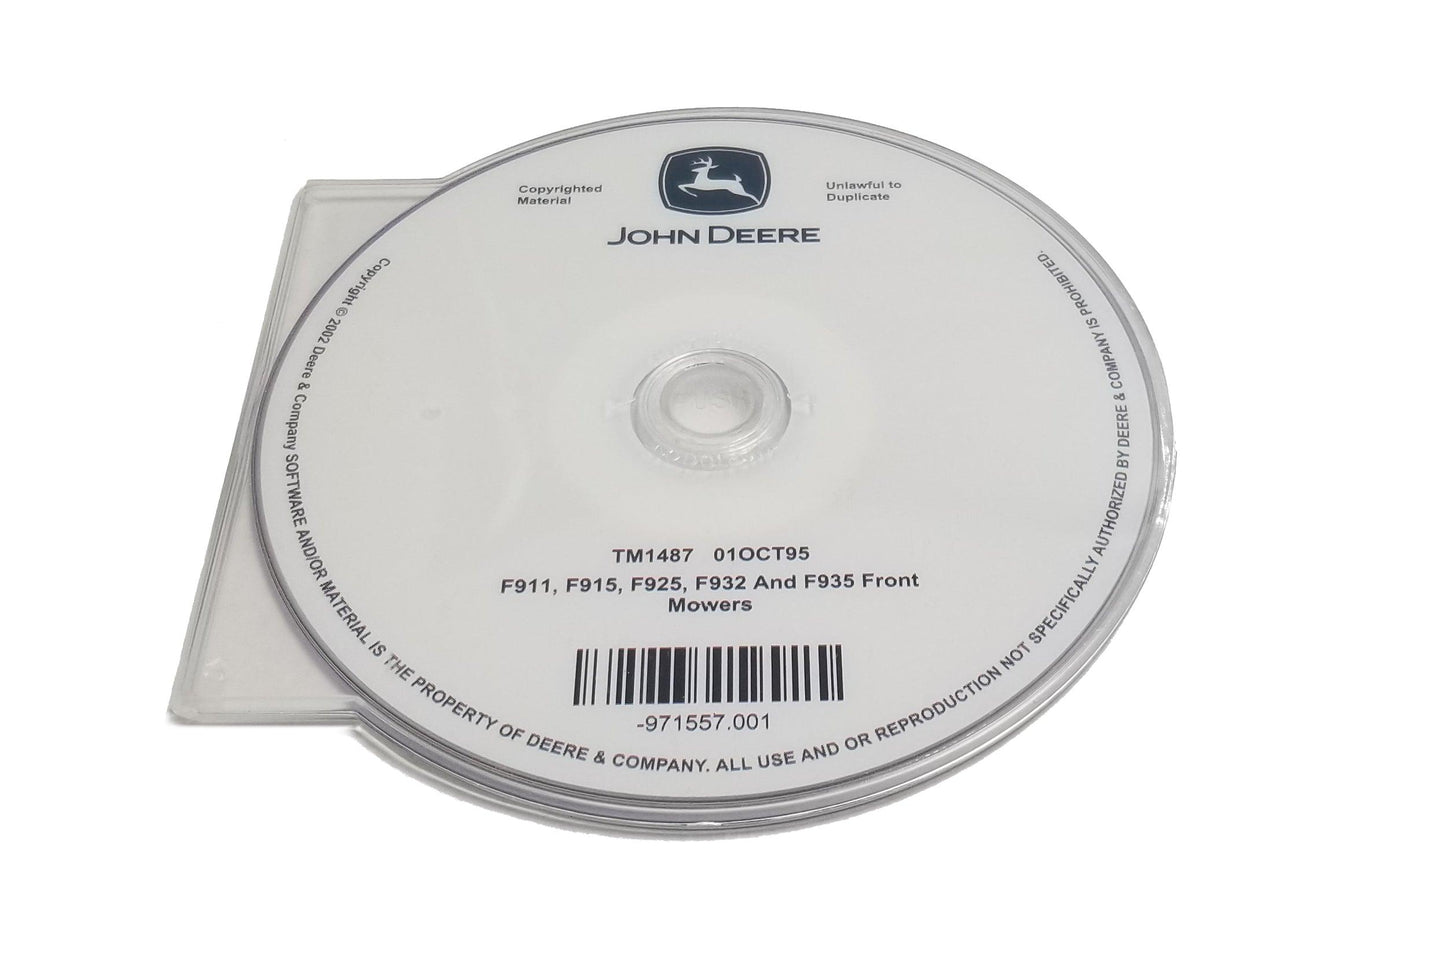 John Deere F911/F915/F925/F932/F935 Front Mowers Technical CD Manual - TM1487CD